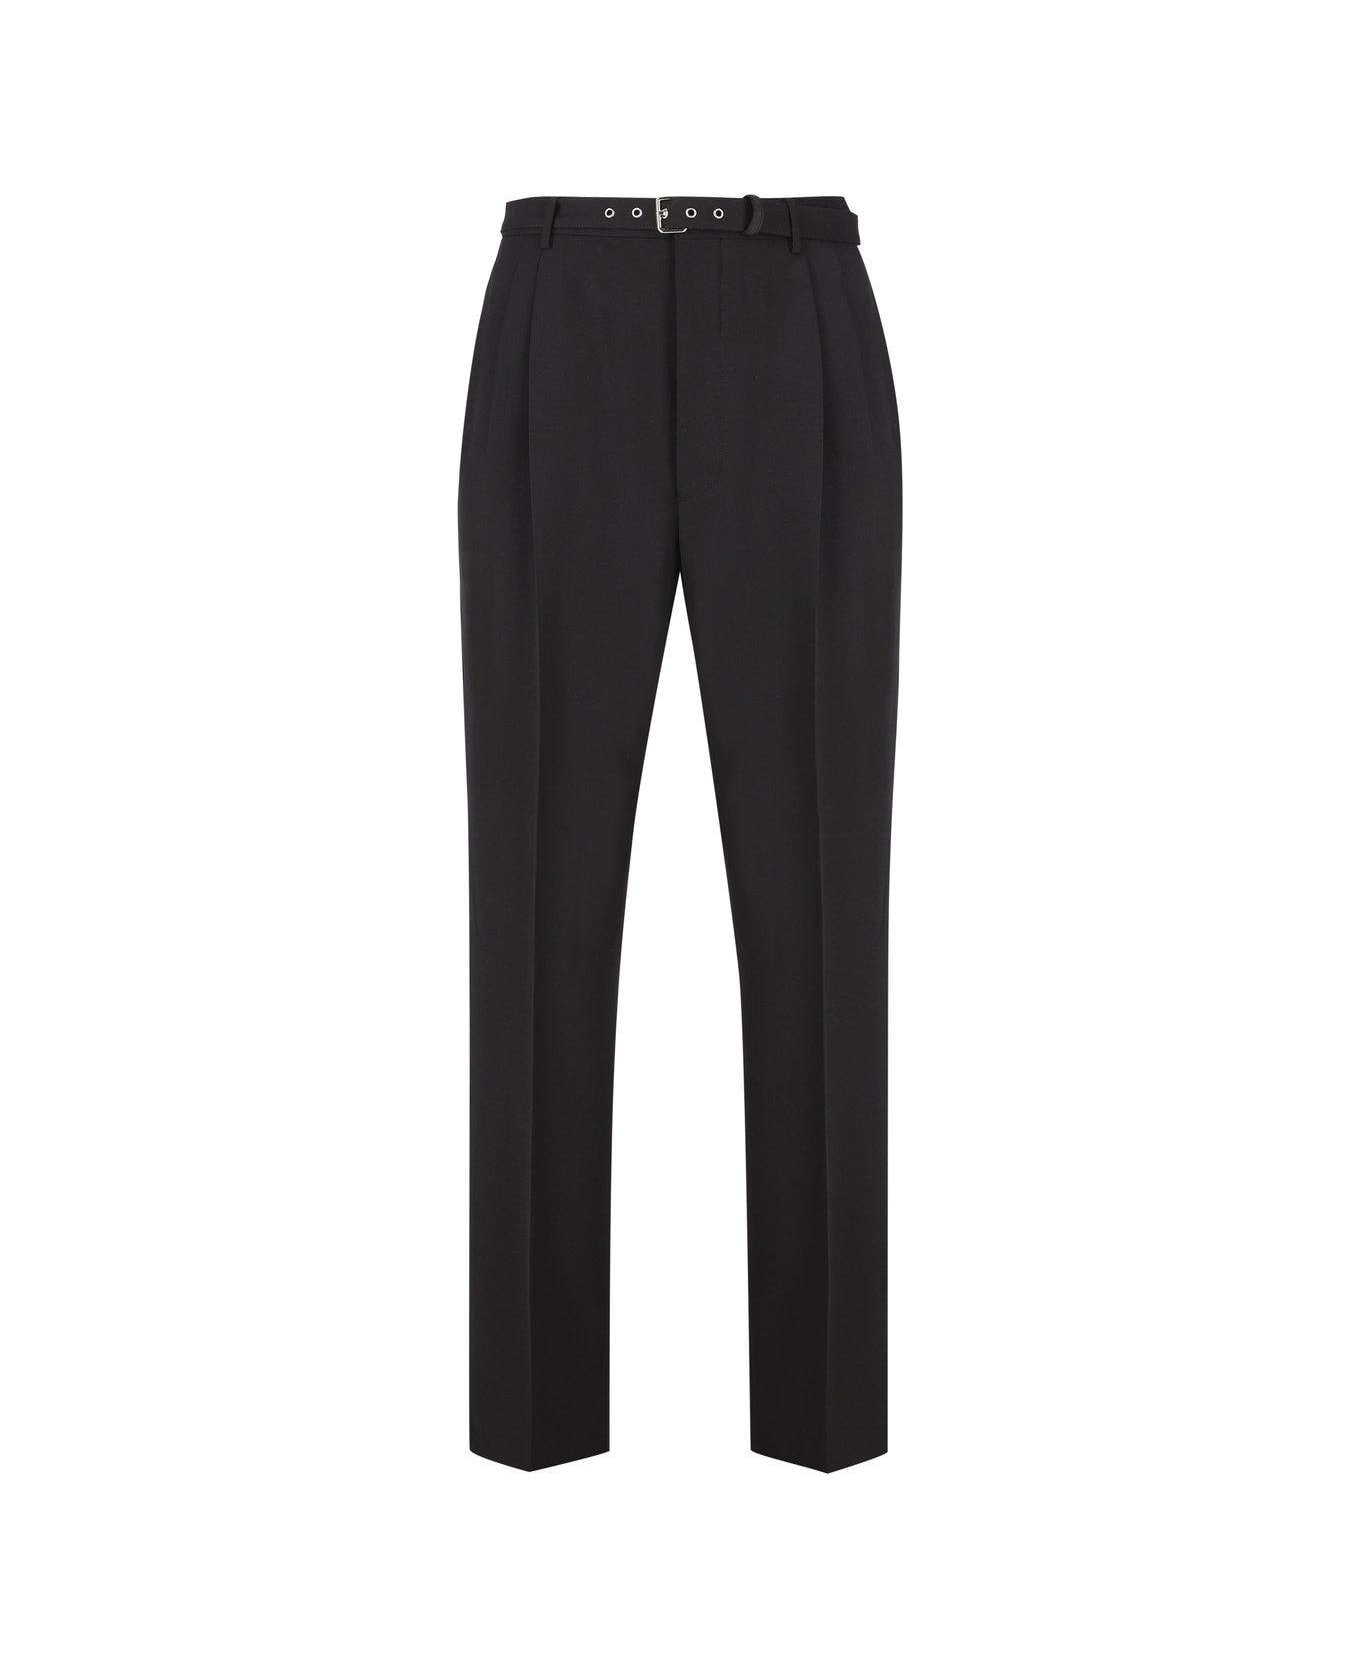 Prada Belted Tailored Trousers - Nero